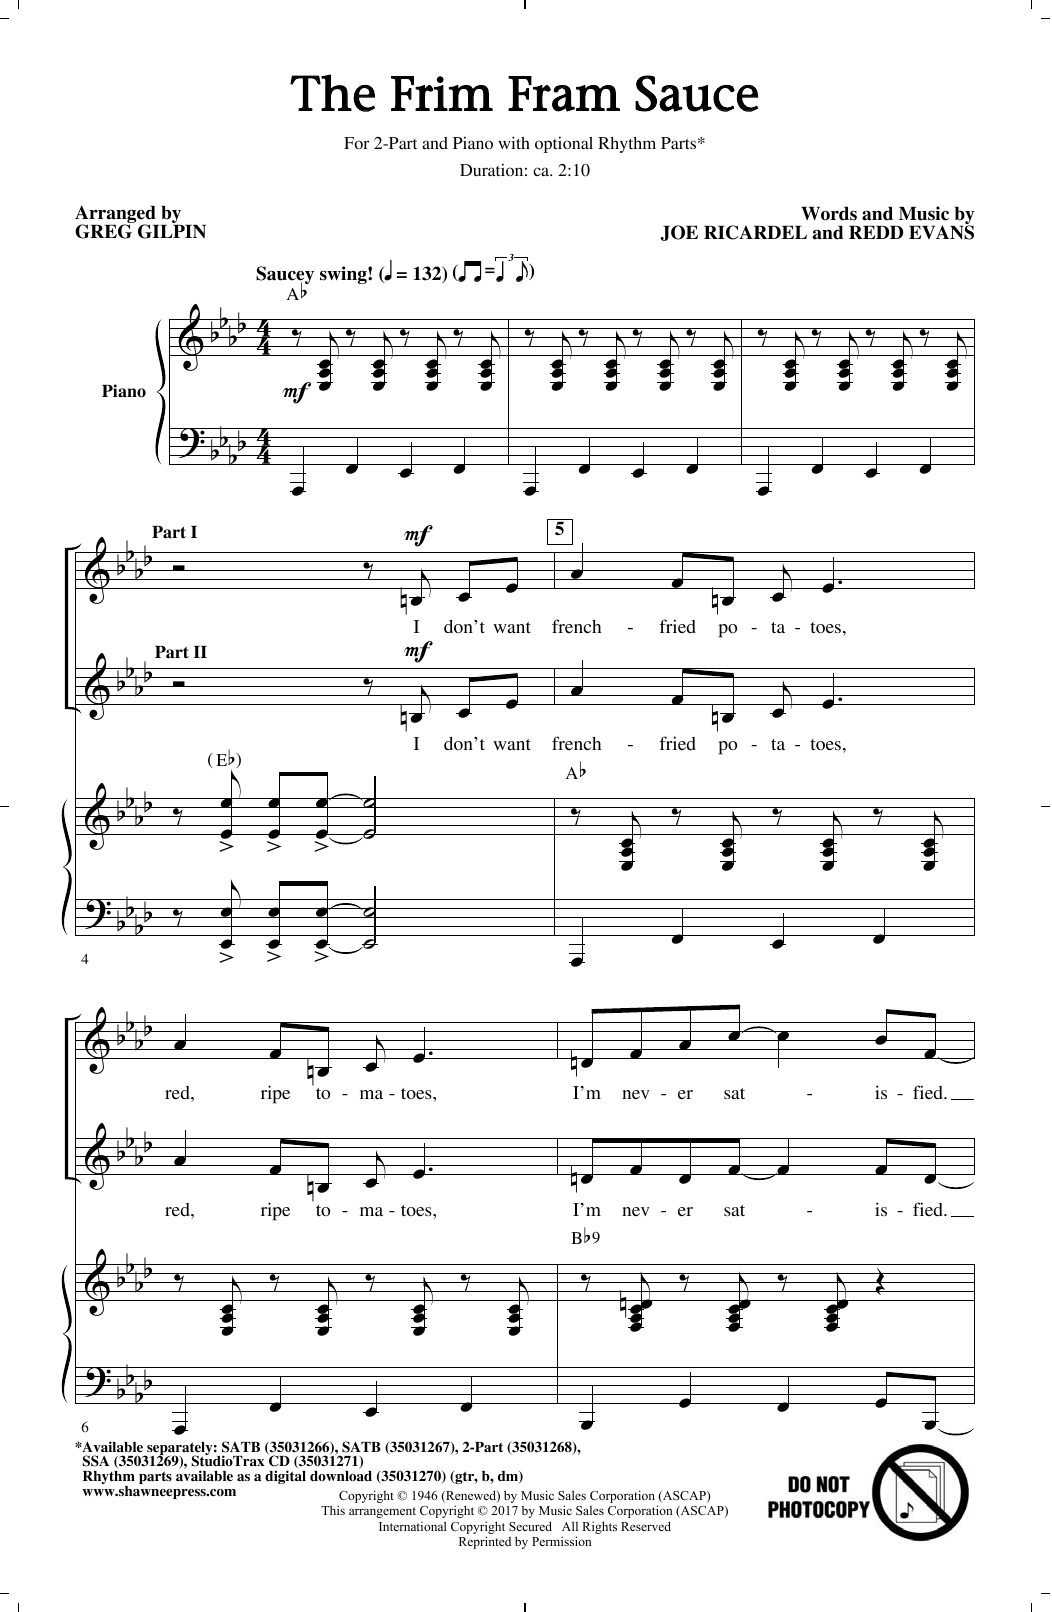 Greg Gilpin The Frim Fram Sauce Sheet Music Notes & Chords for 2-Part Choir - Download or Print PDF